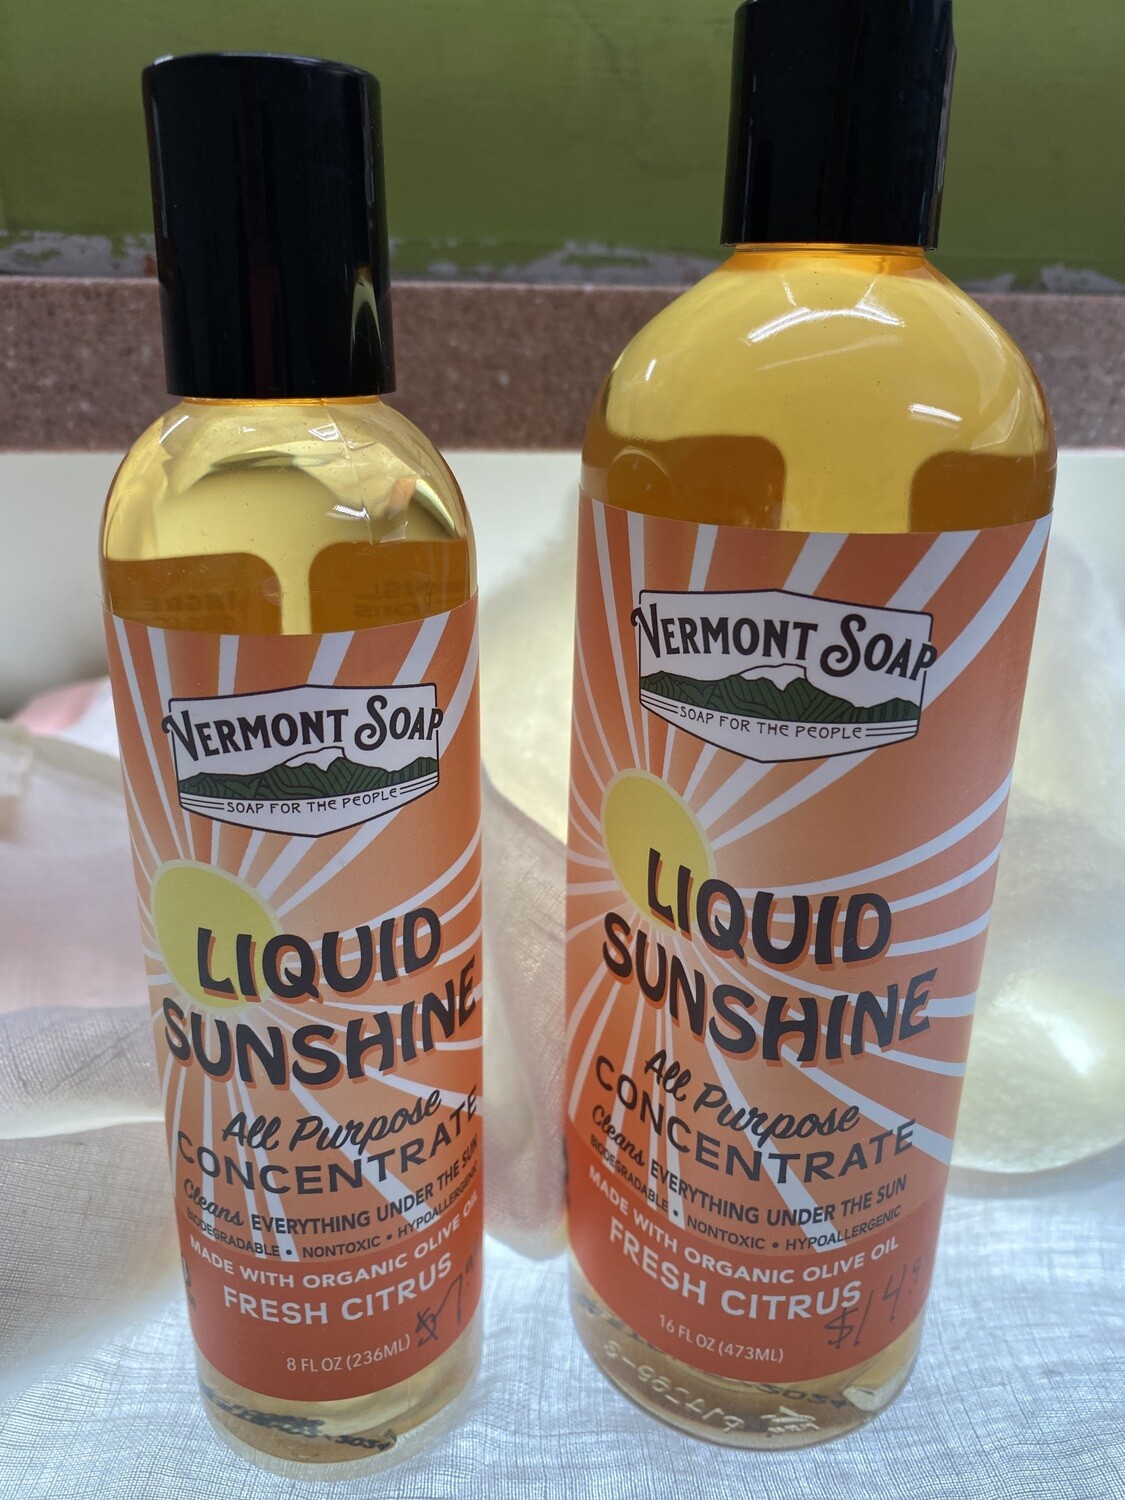 Vermont Soap
Liquid Sunshine 8oz